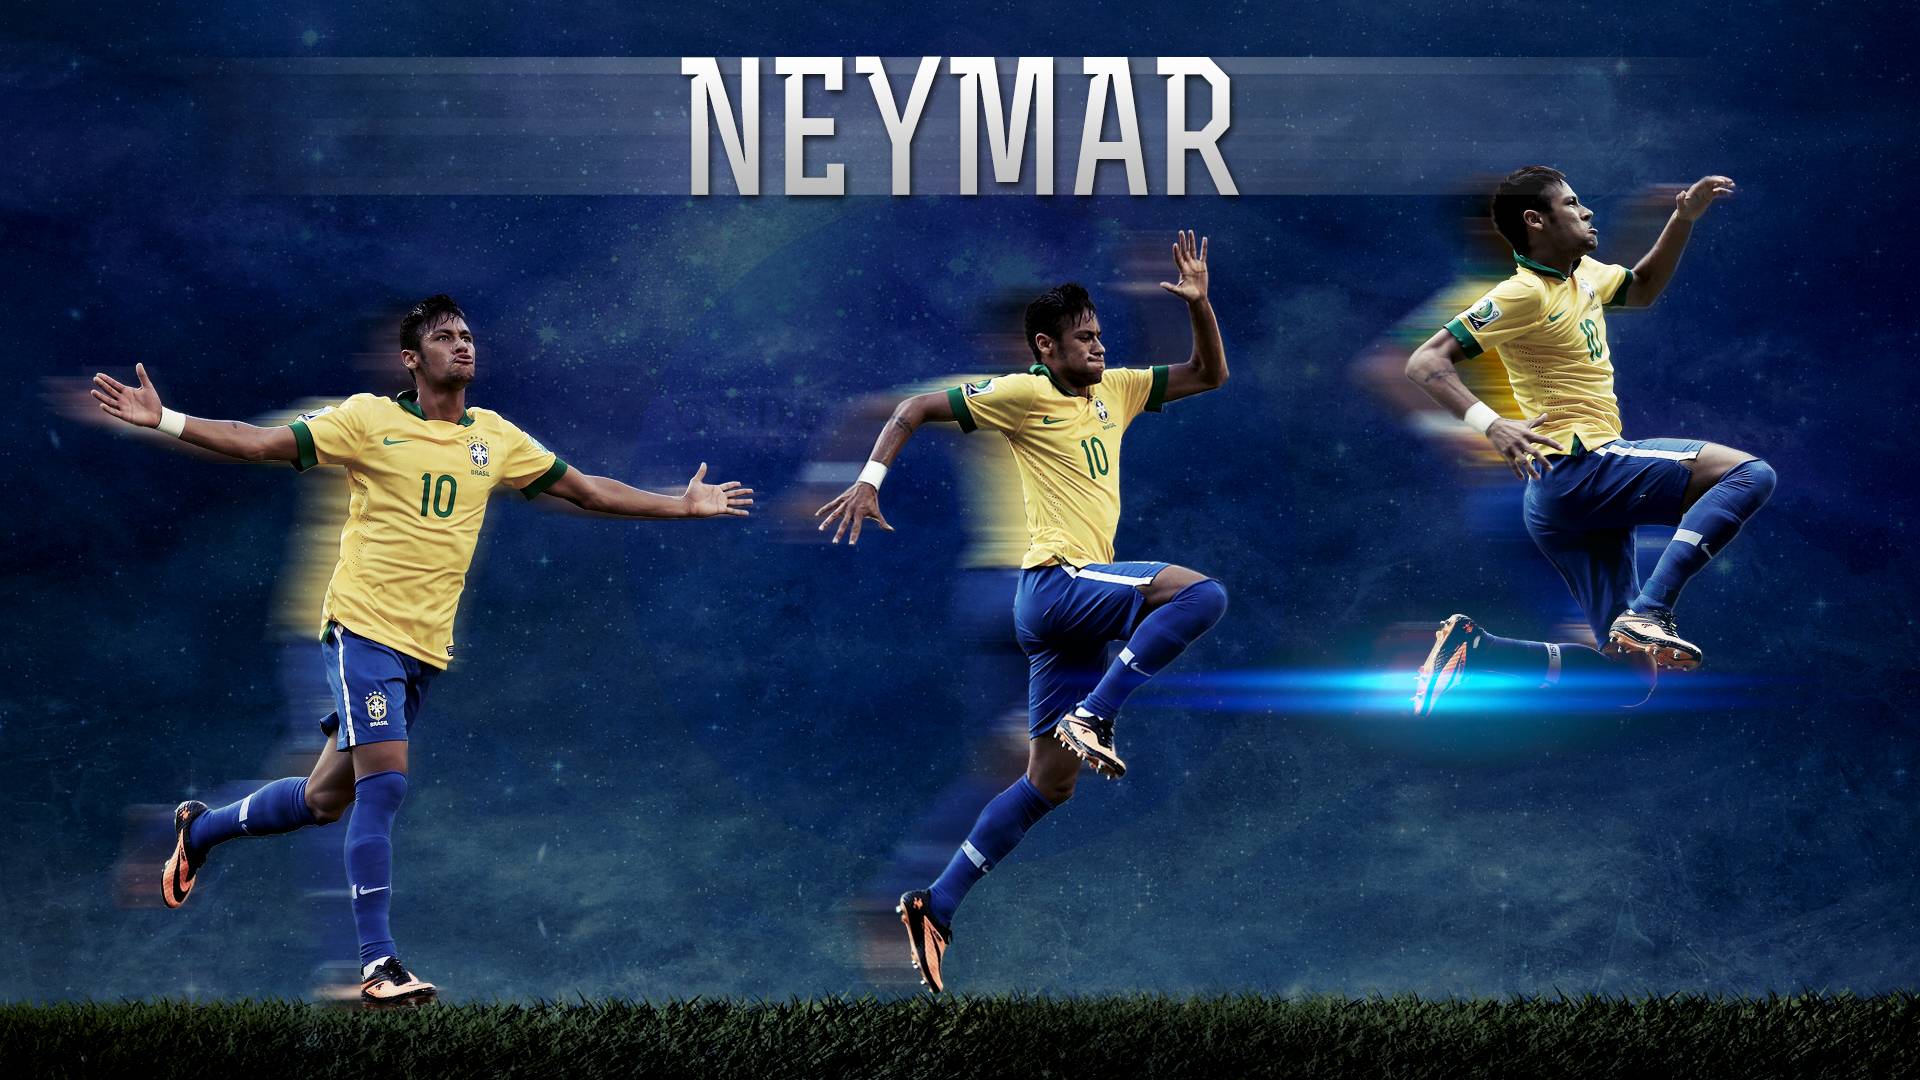 Neymar HD Wallpapers 2015 - Wallpaper Cave